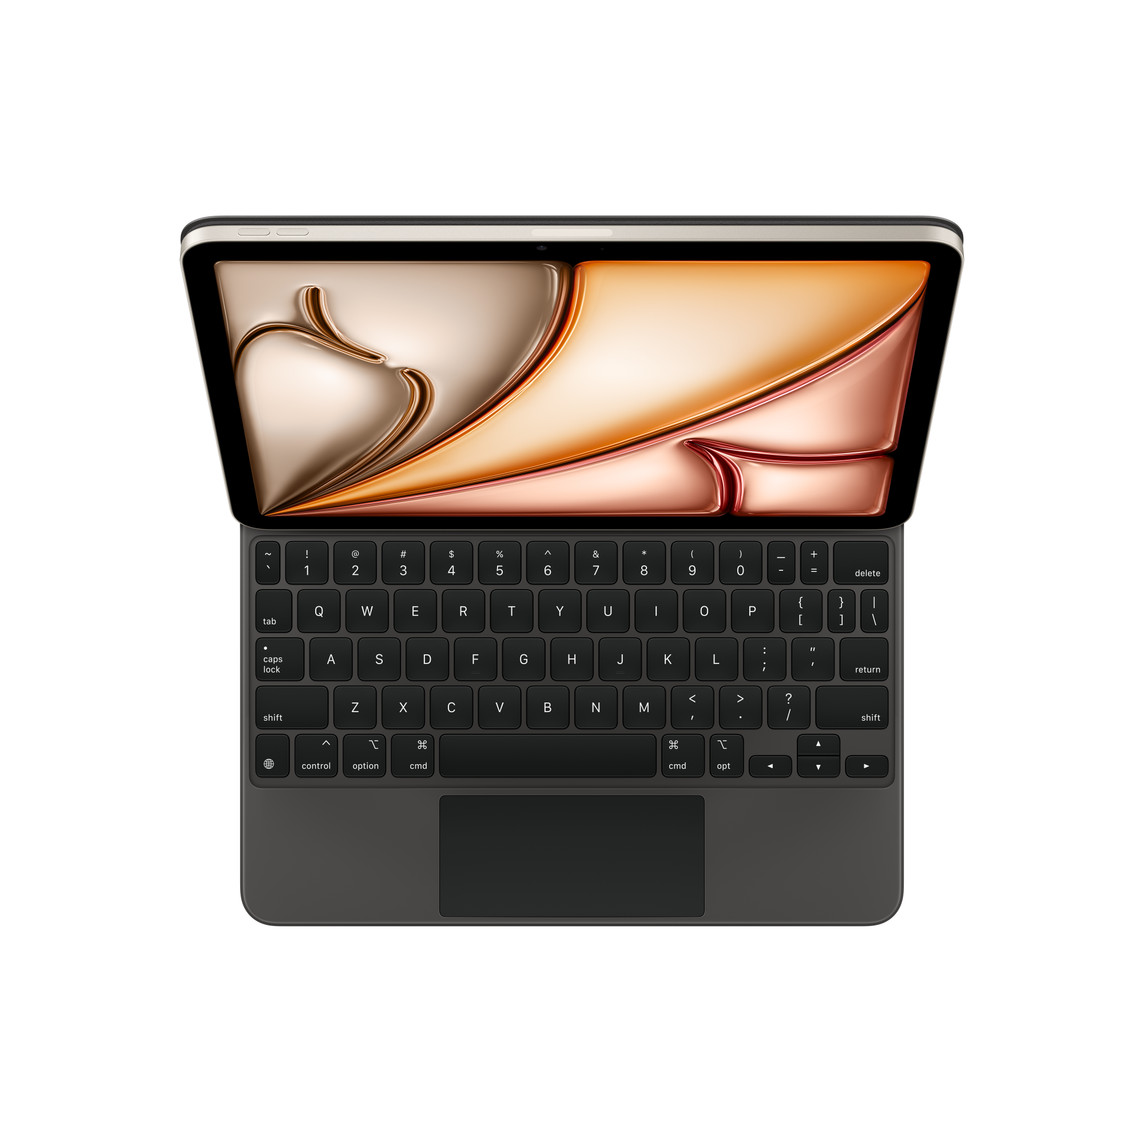 iPad Air com Magic Keyboard, preto, teclas pretas com letras a branco, teclas de seta dispostas em T invertido e trackpad integrado